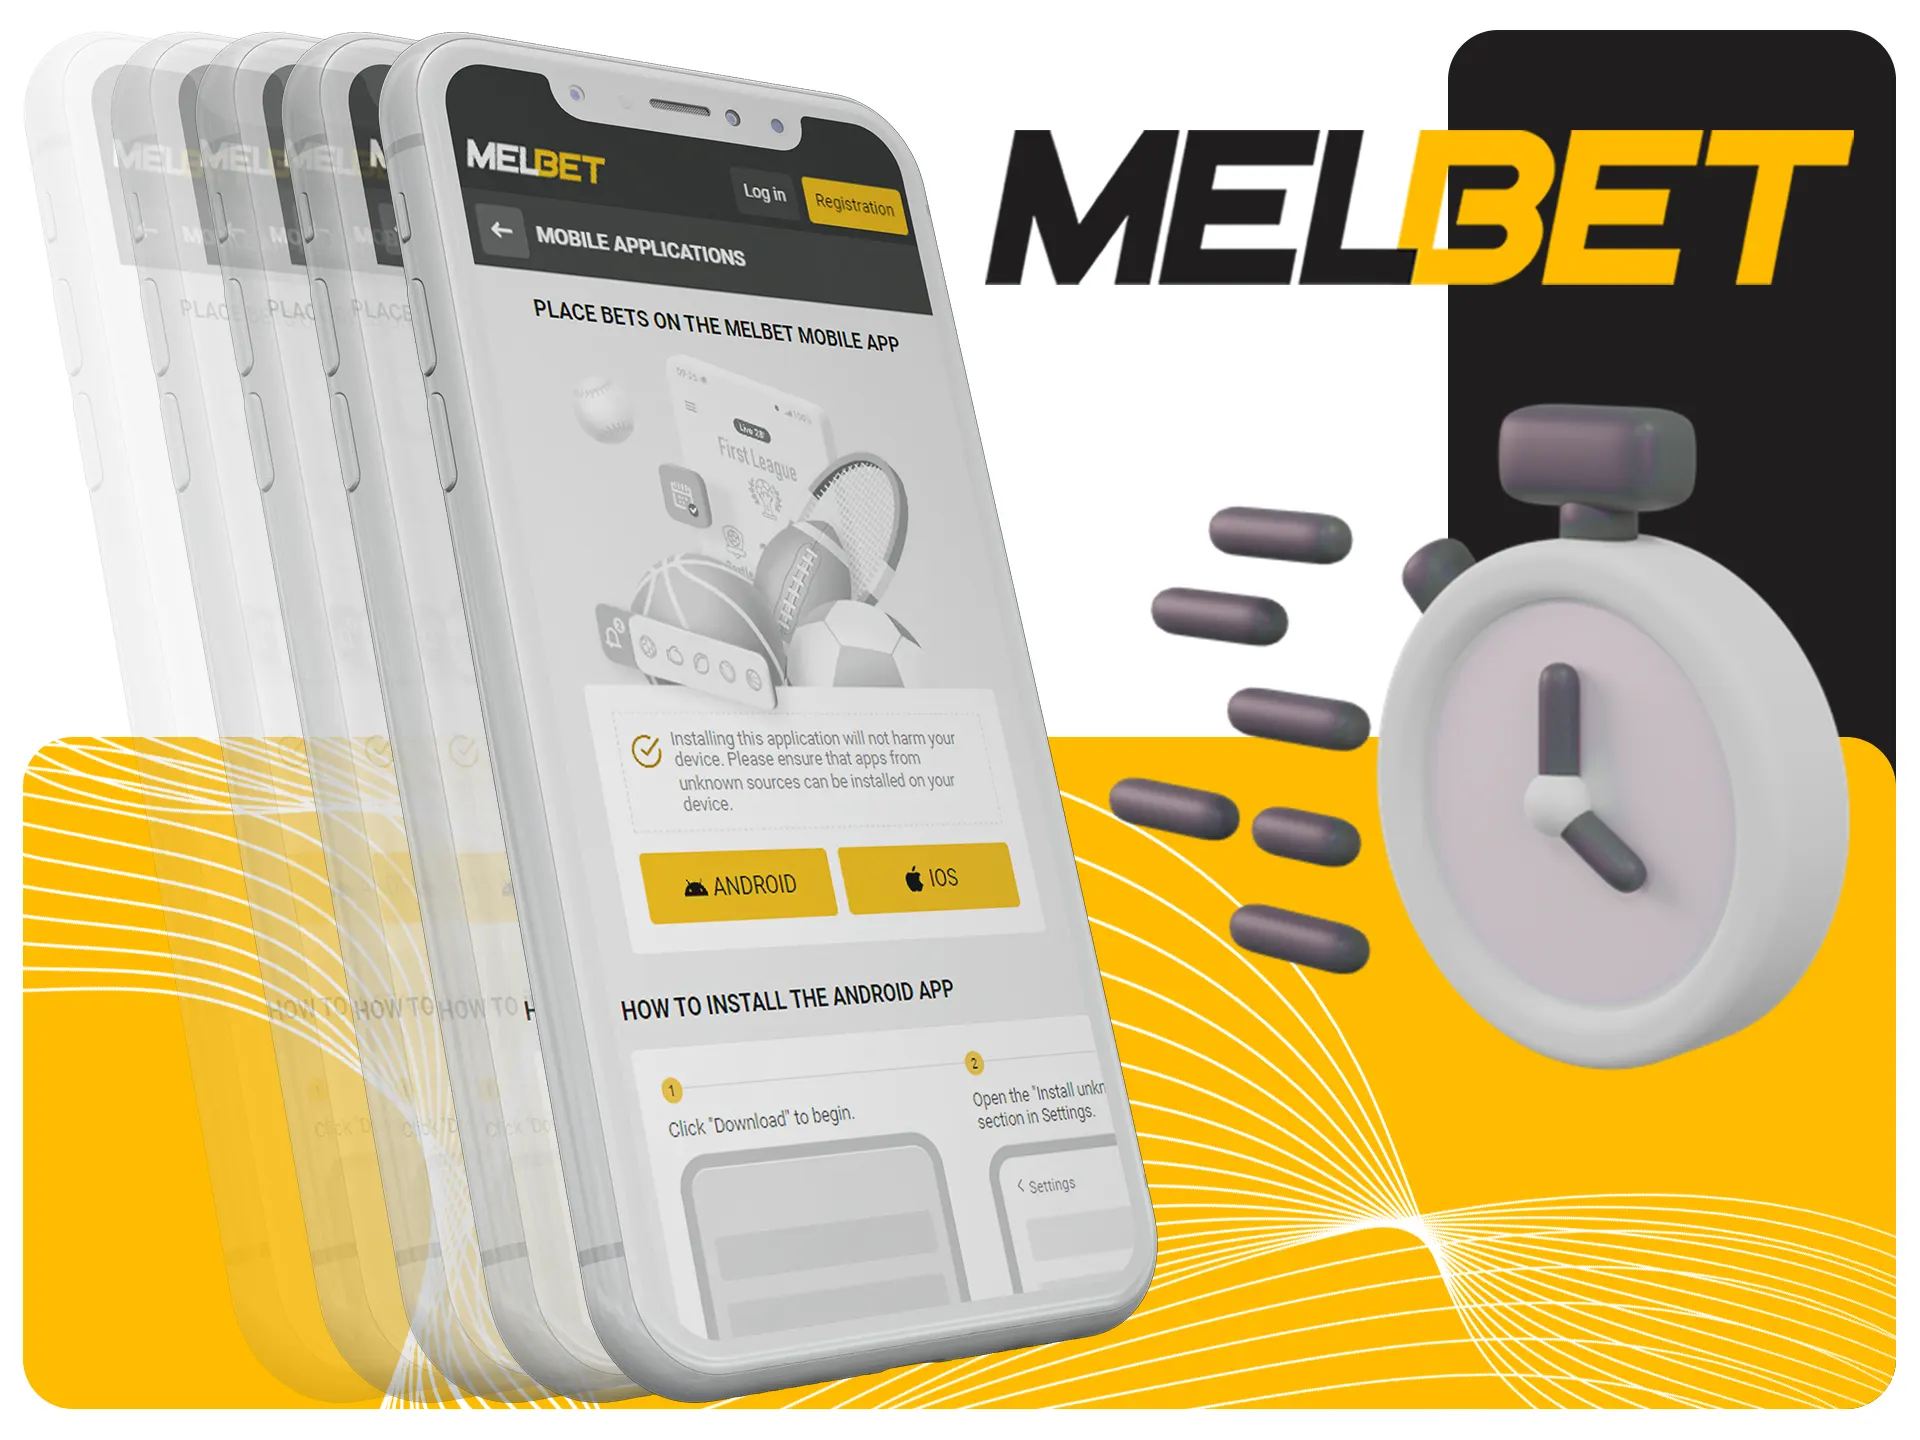 Melbet app is really fast.